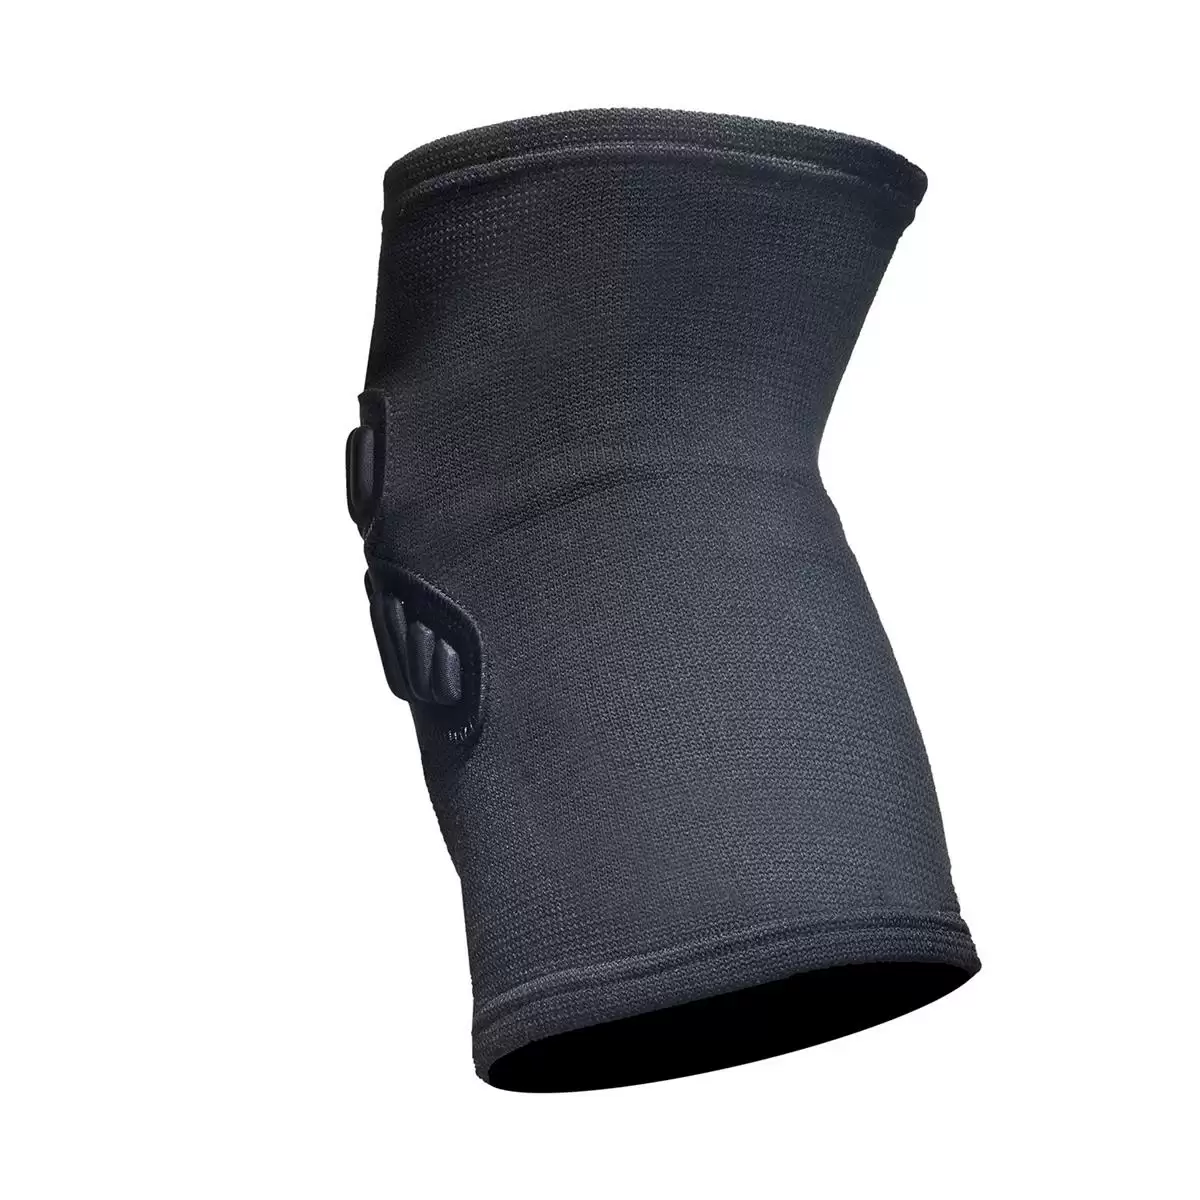 Sleeve 3D Knee guards Black Size L #1